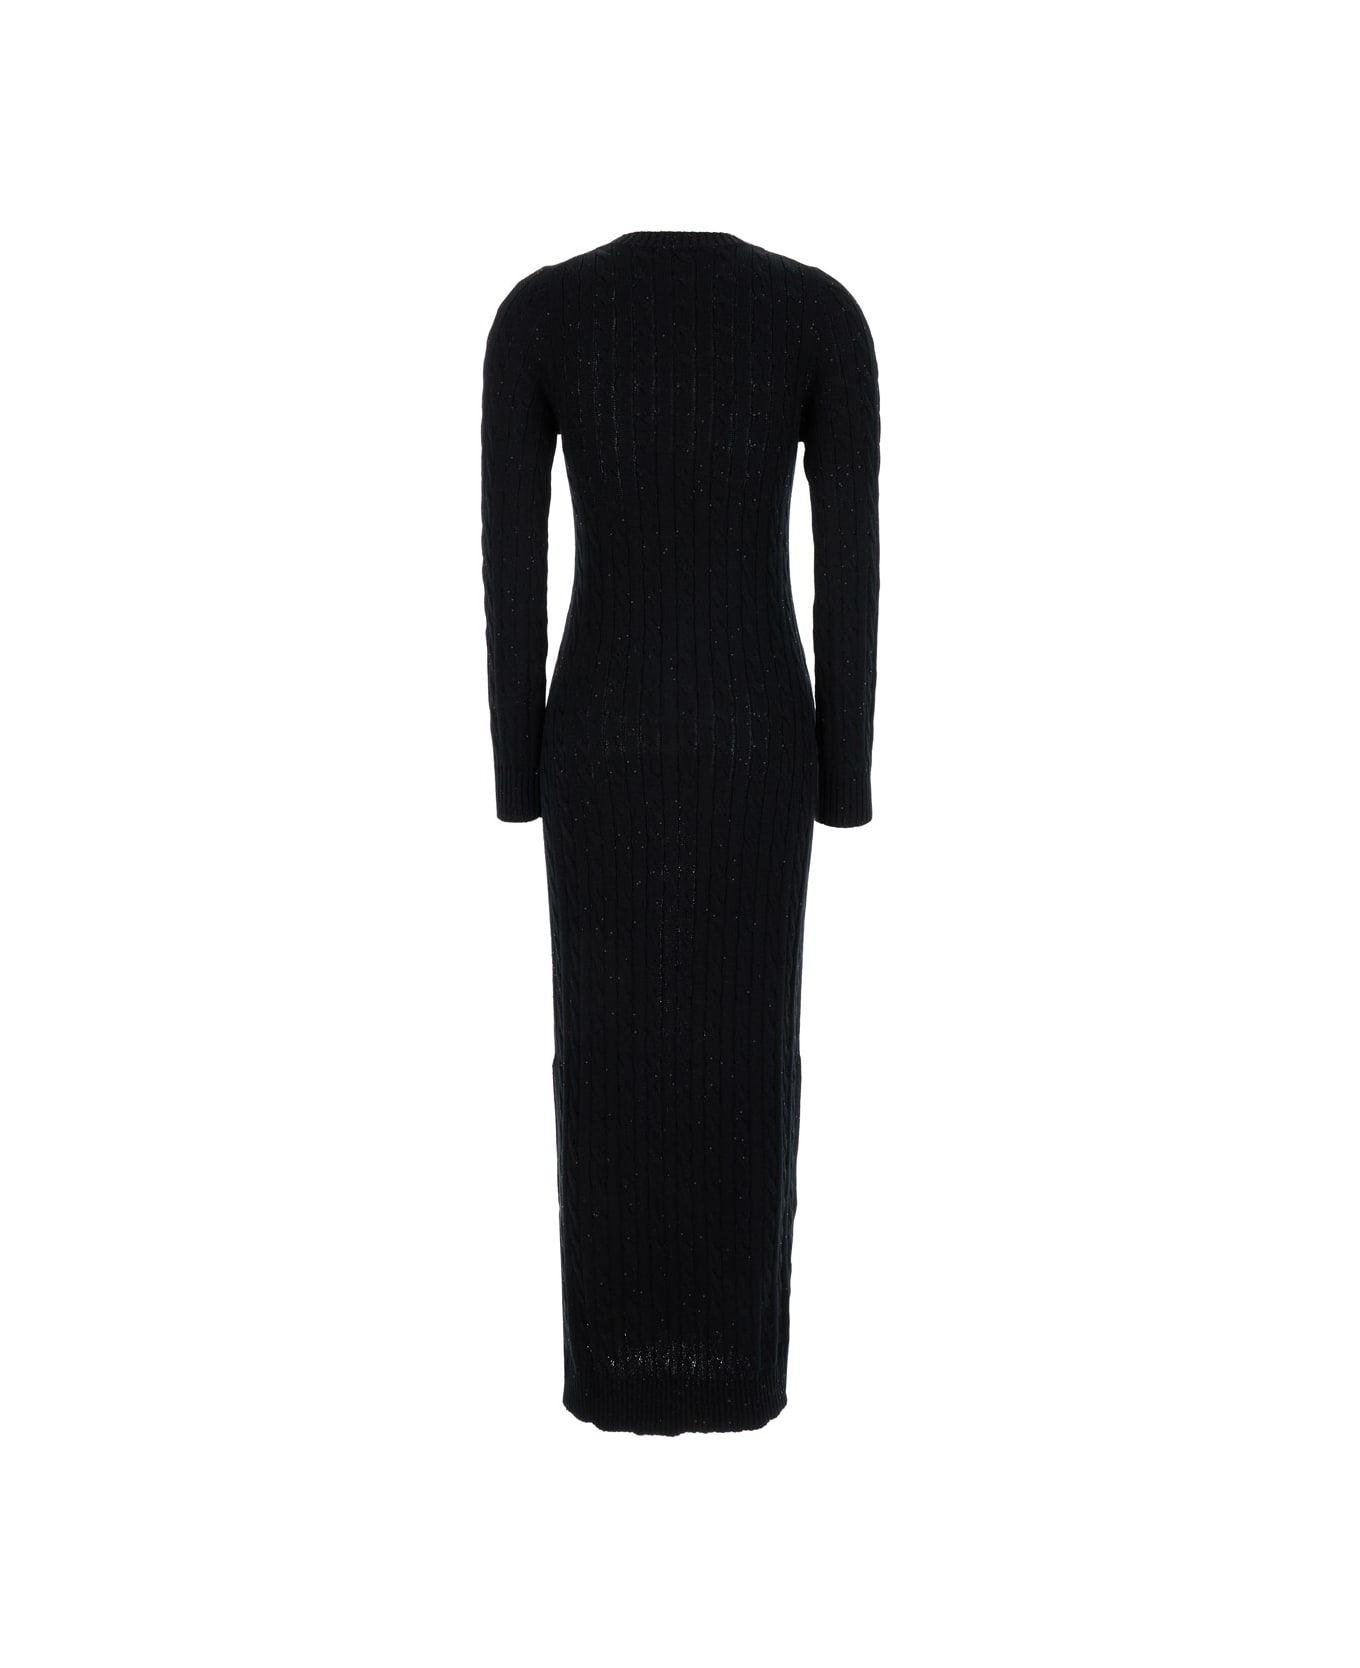 Brunello Cucinelli Black Sequin Embellished Cable Knit Dress In Cotton Blend Woman - Black